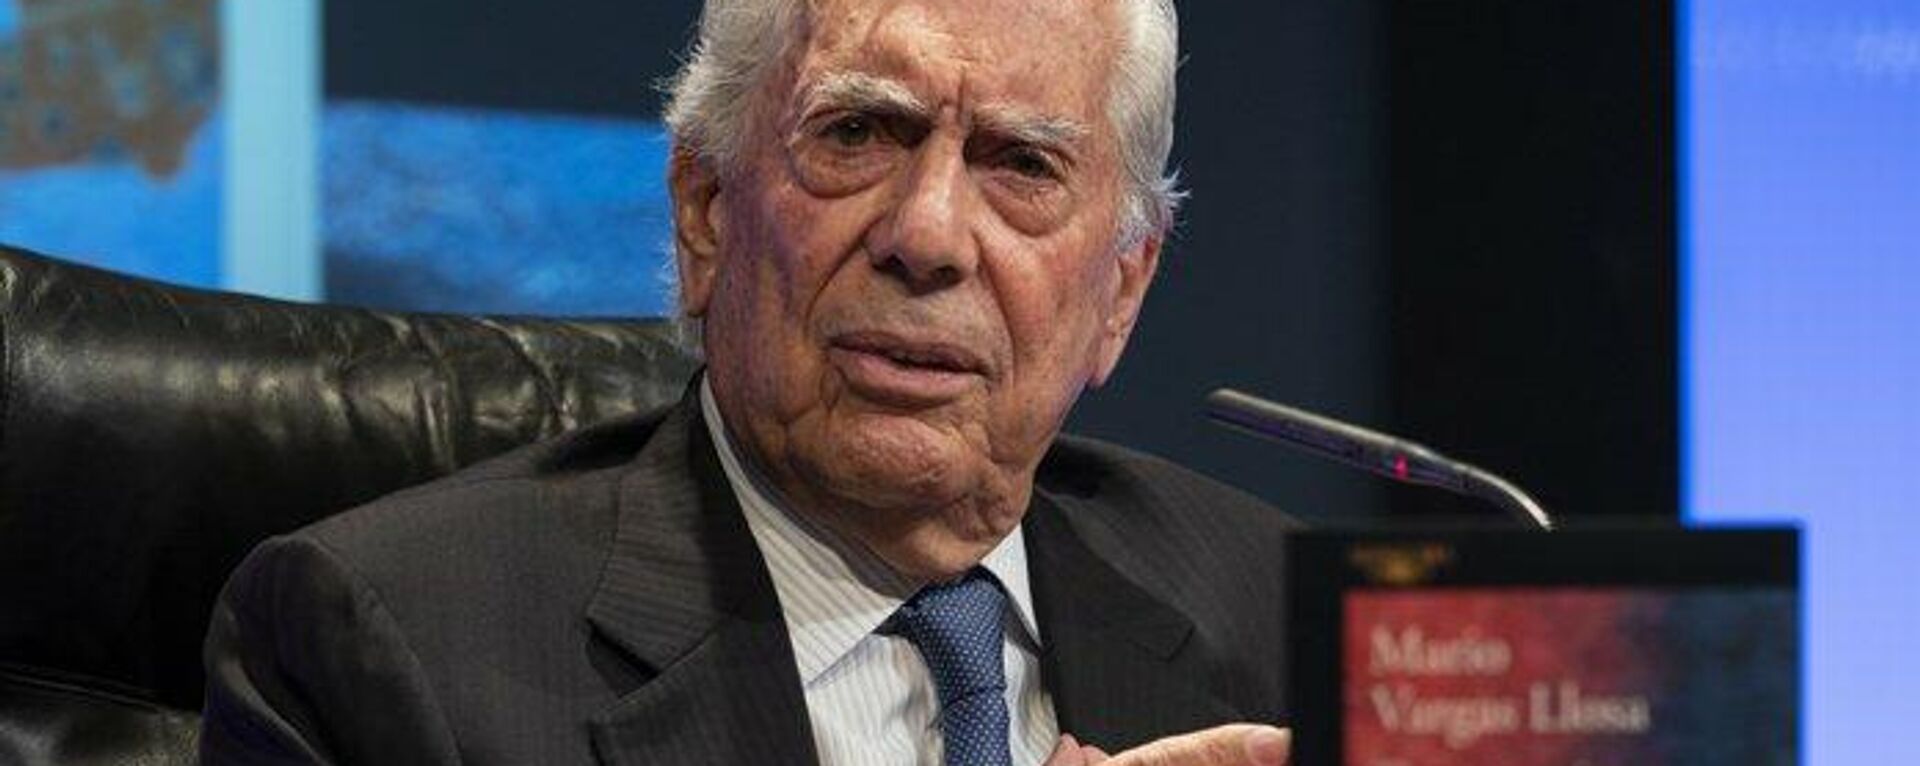 Mario Vargas Llosa, escritor peruano.  - Sputnik Mundo, 1920, 30.12.2021